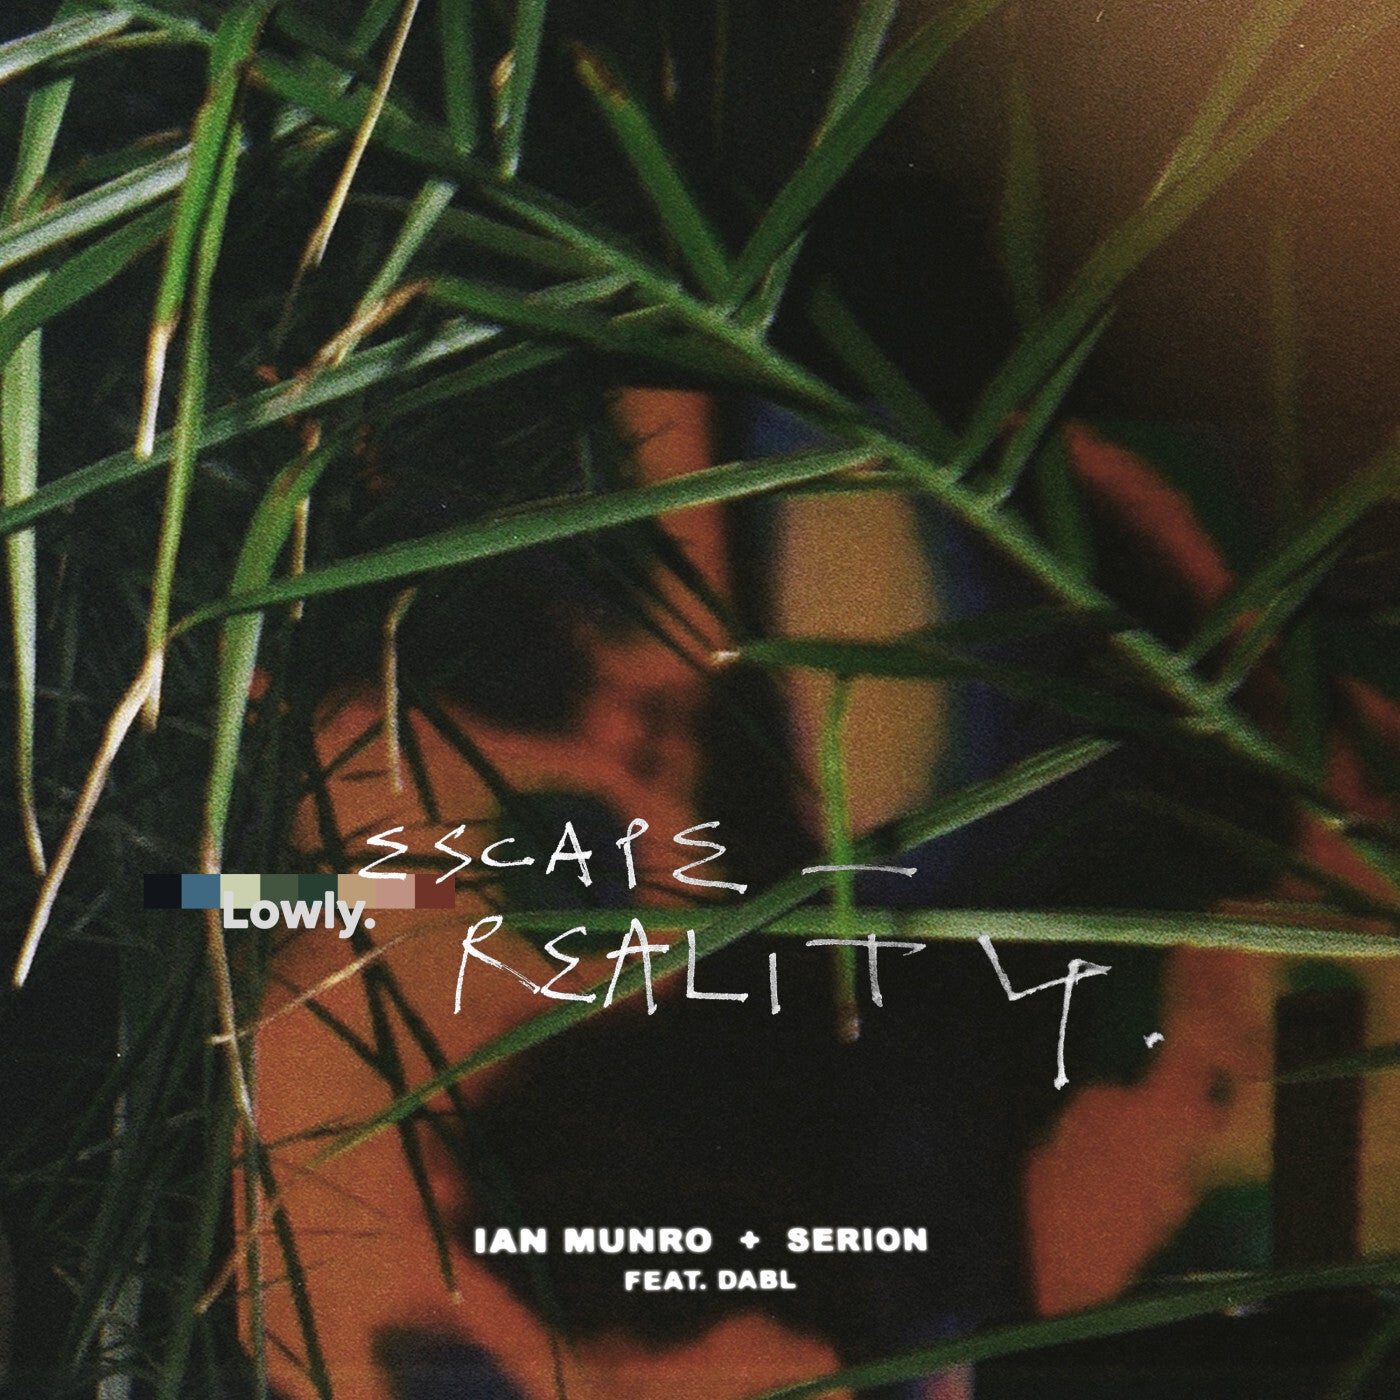 Escape Reality (feat. dabl)